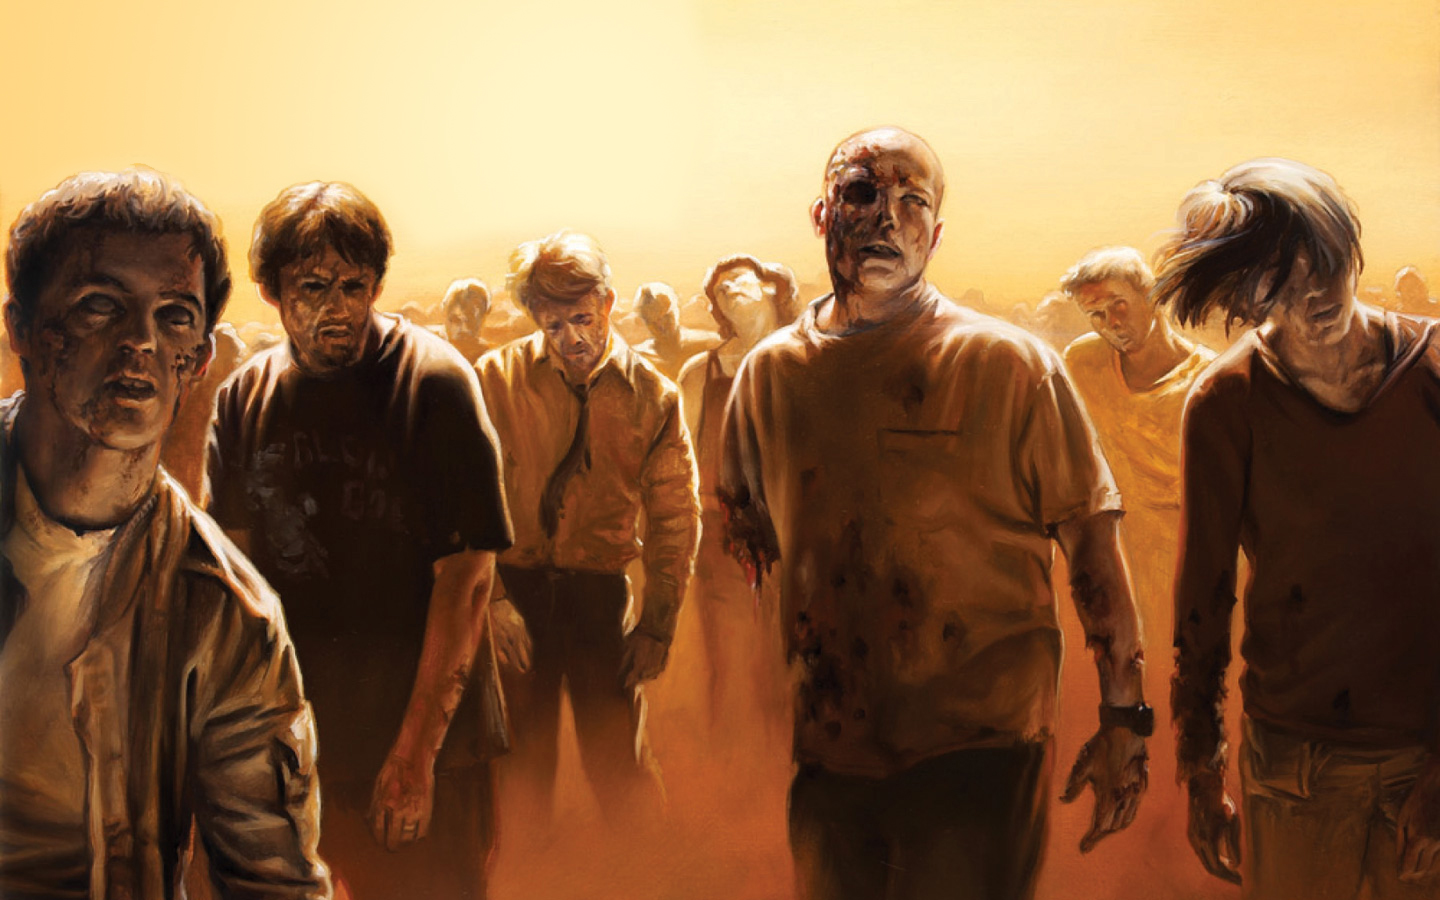 Zombie Undead - Wikipedia